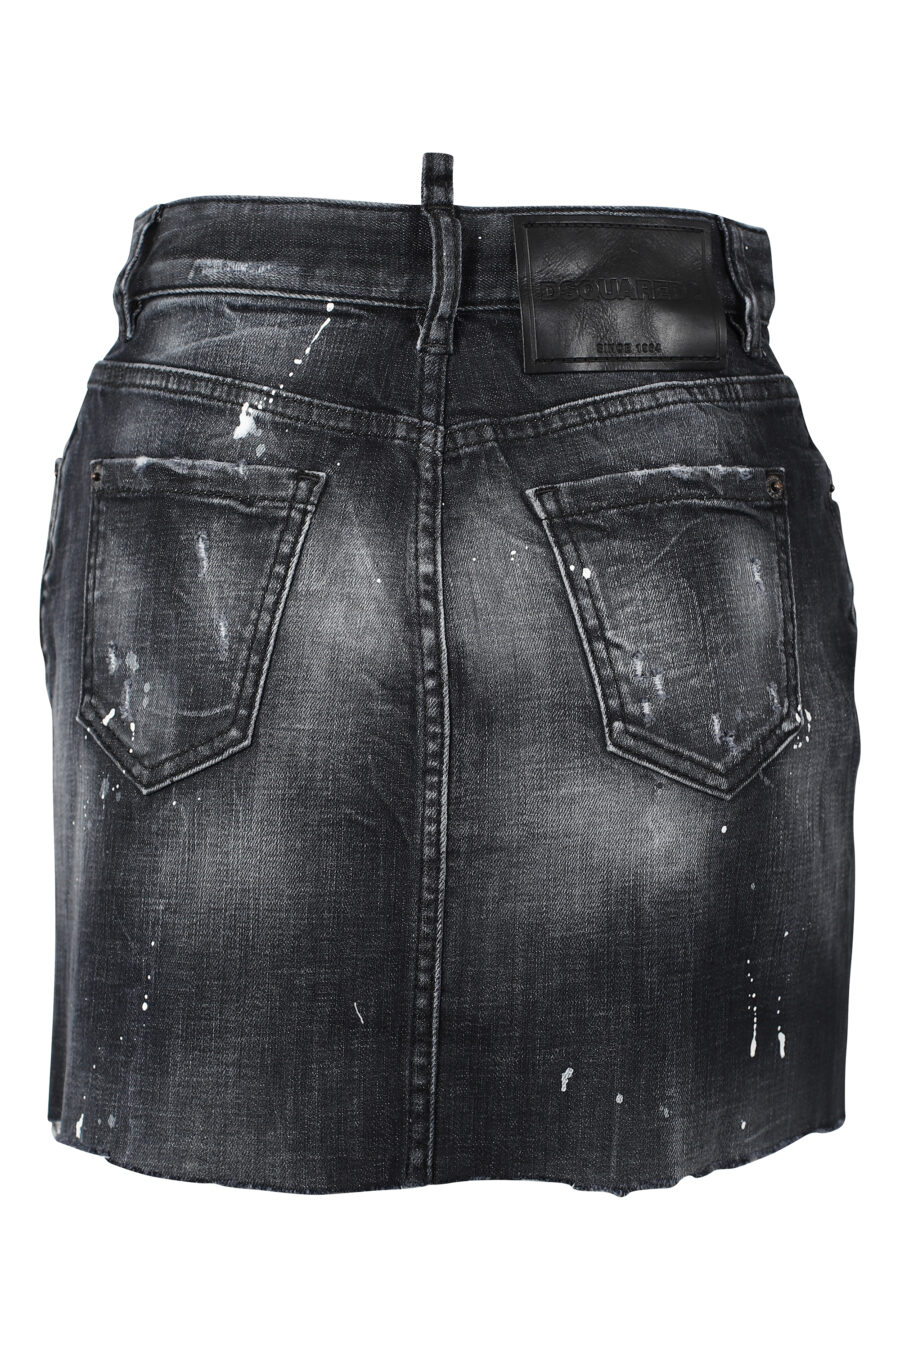 Black raw cut mini skirt with half slit - IMG 9797